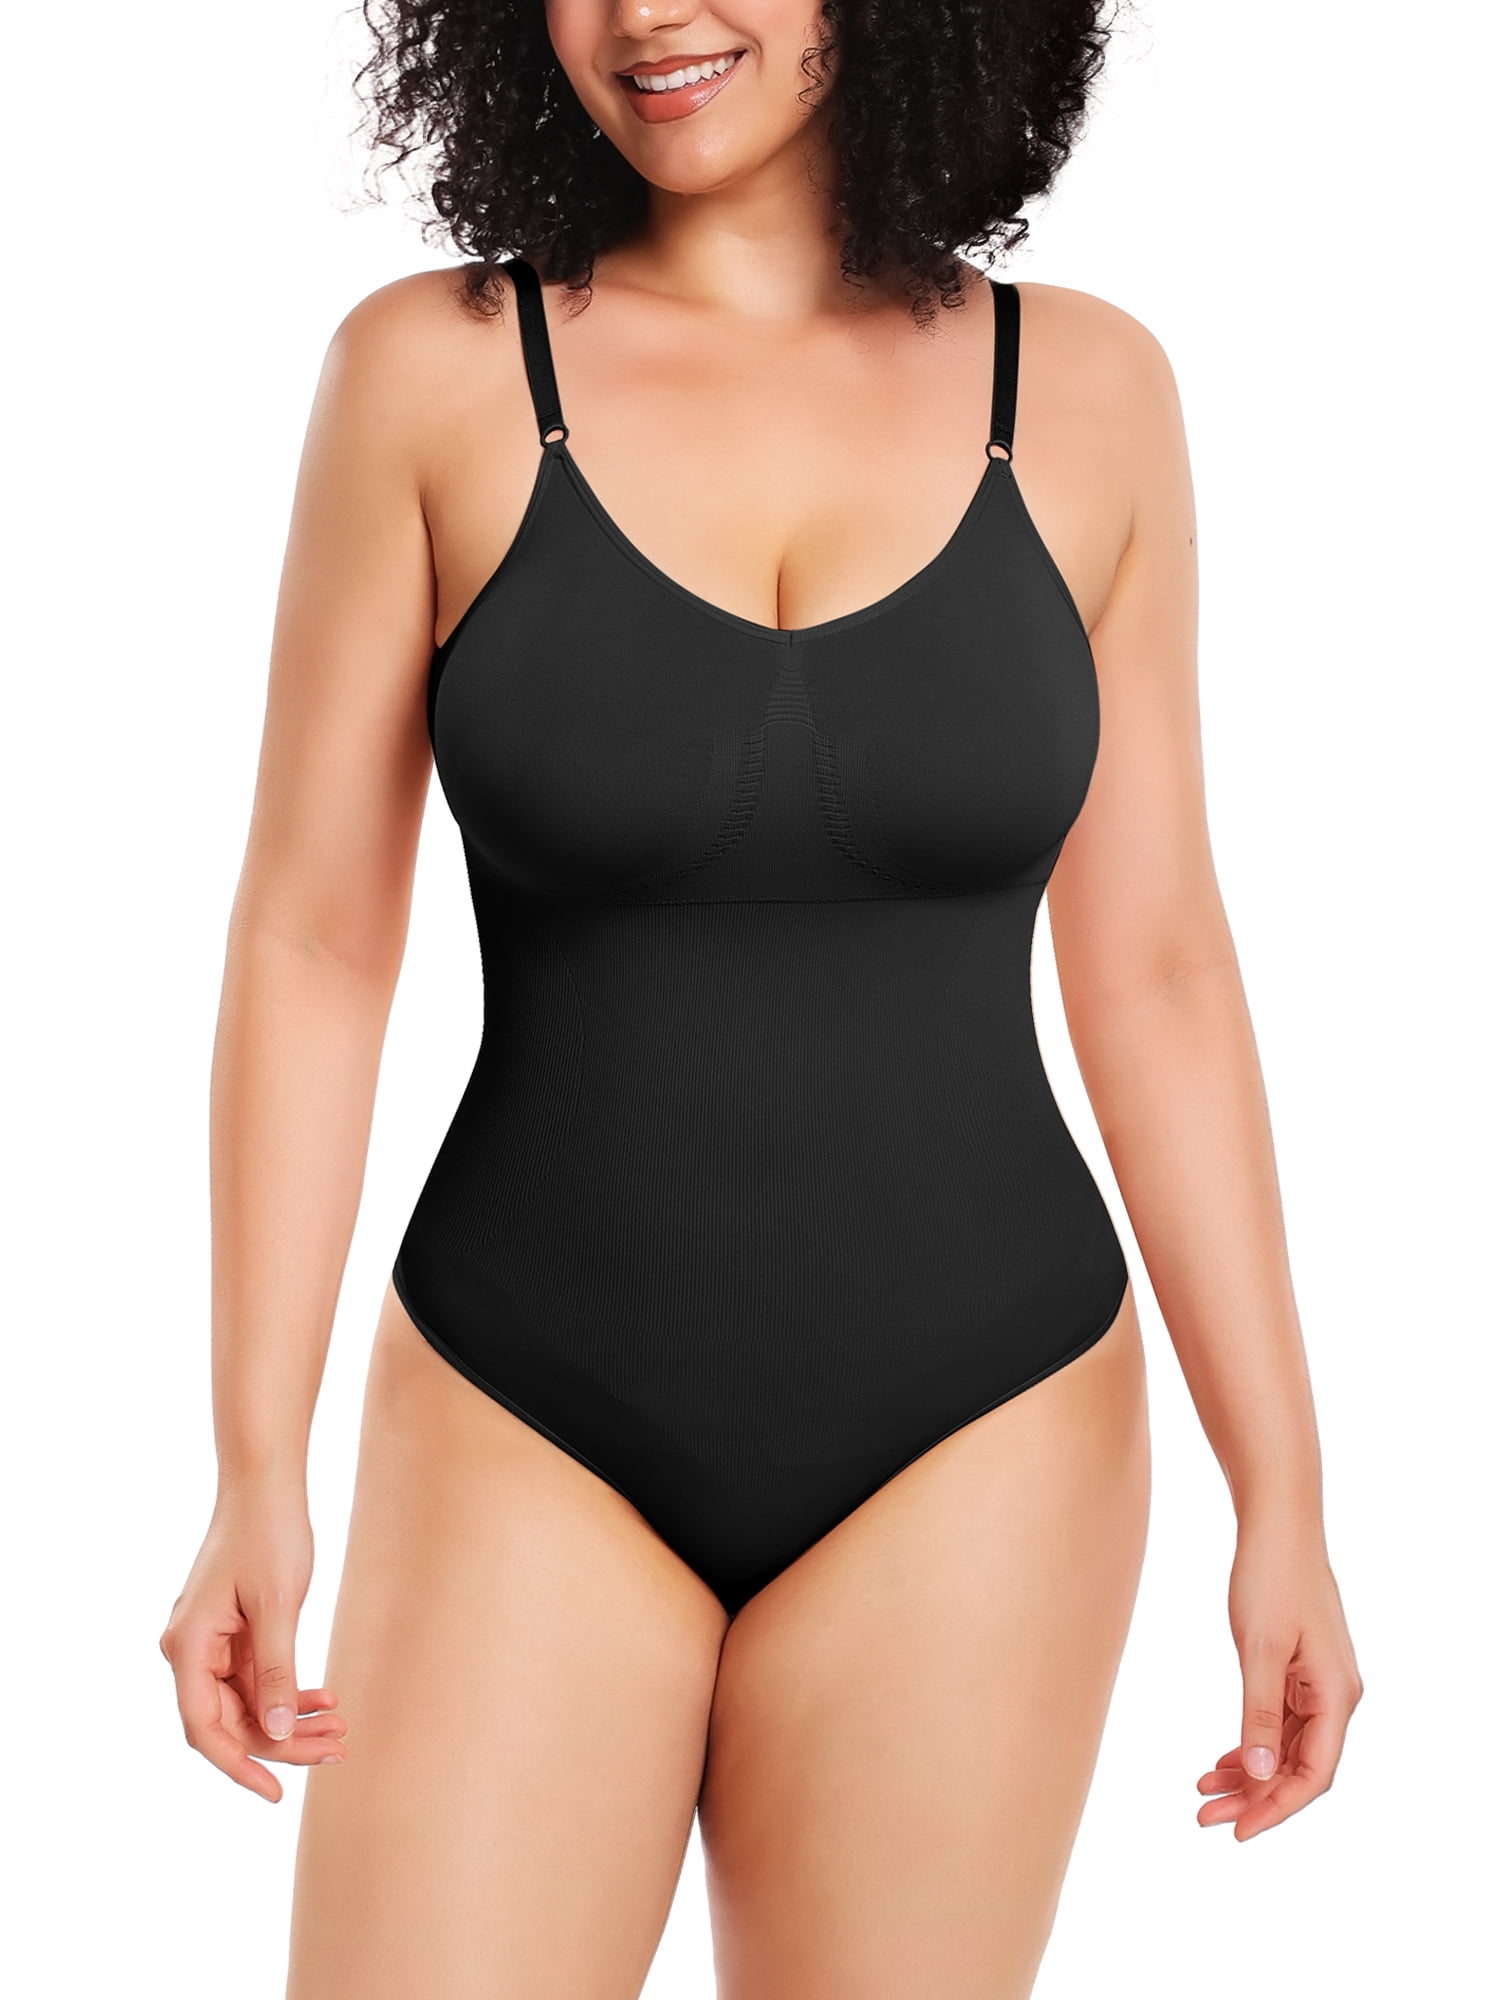 COMFREE Bodysuit for Women Tummy Control Shapewear